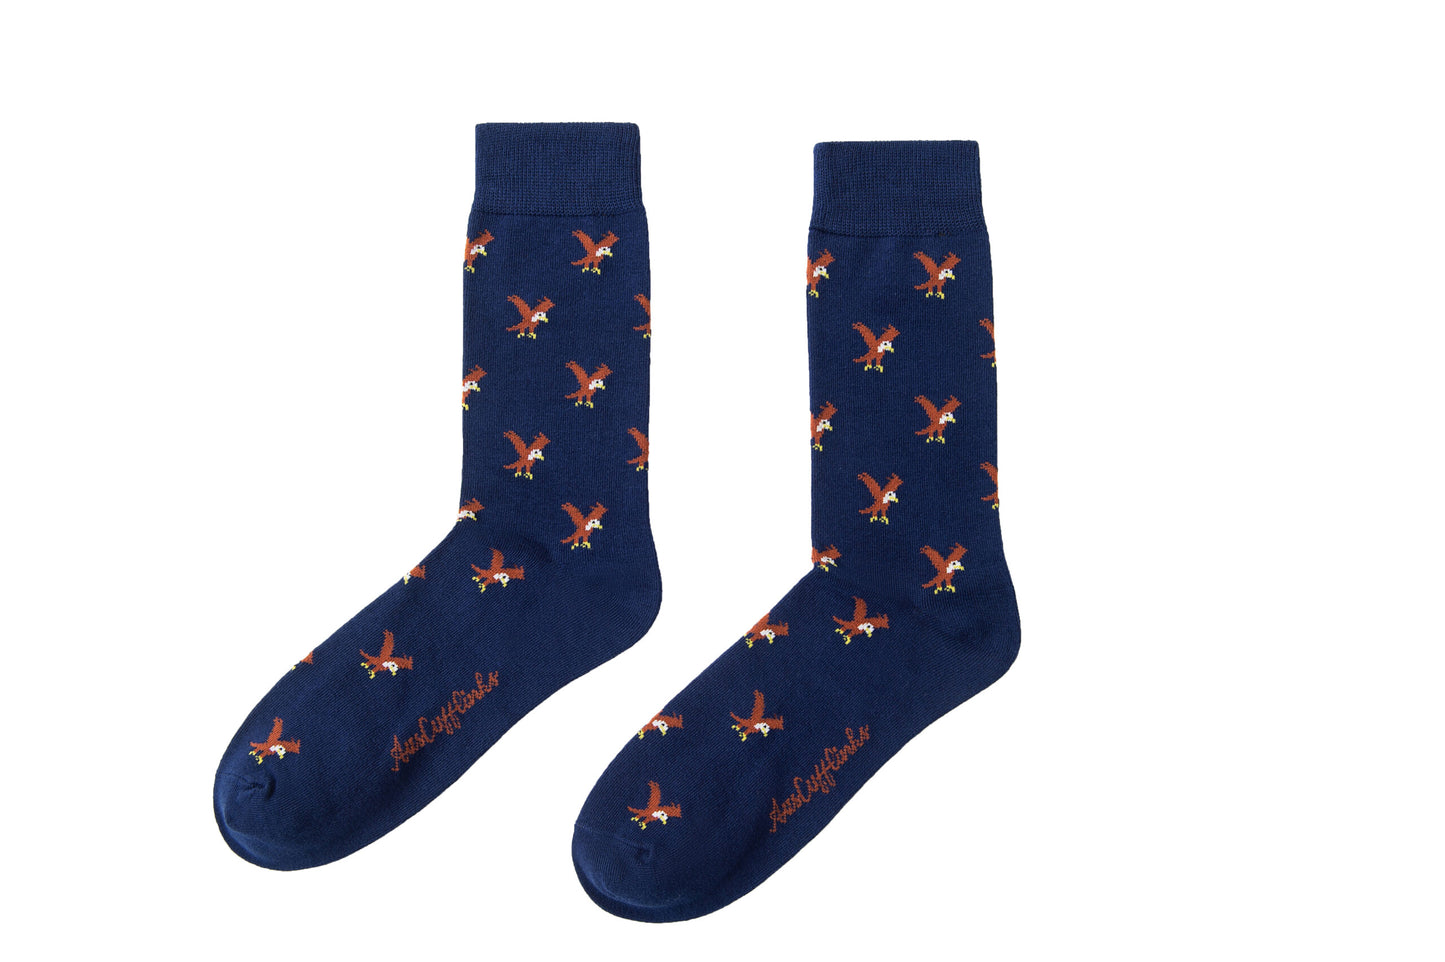 Eagle socks